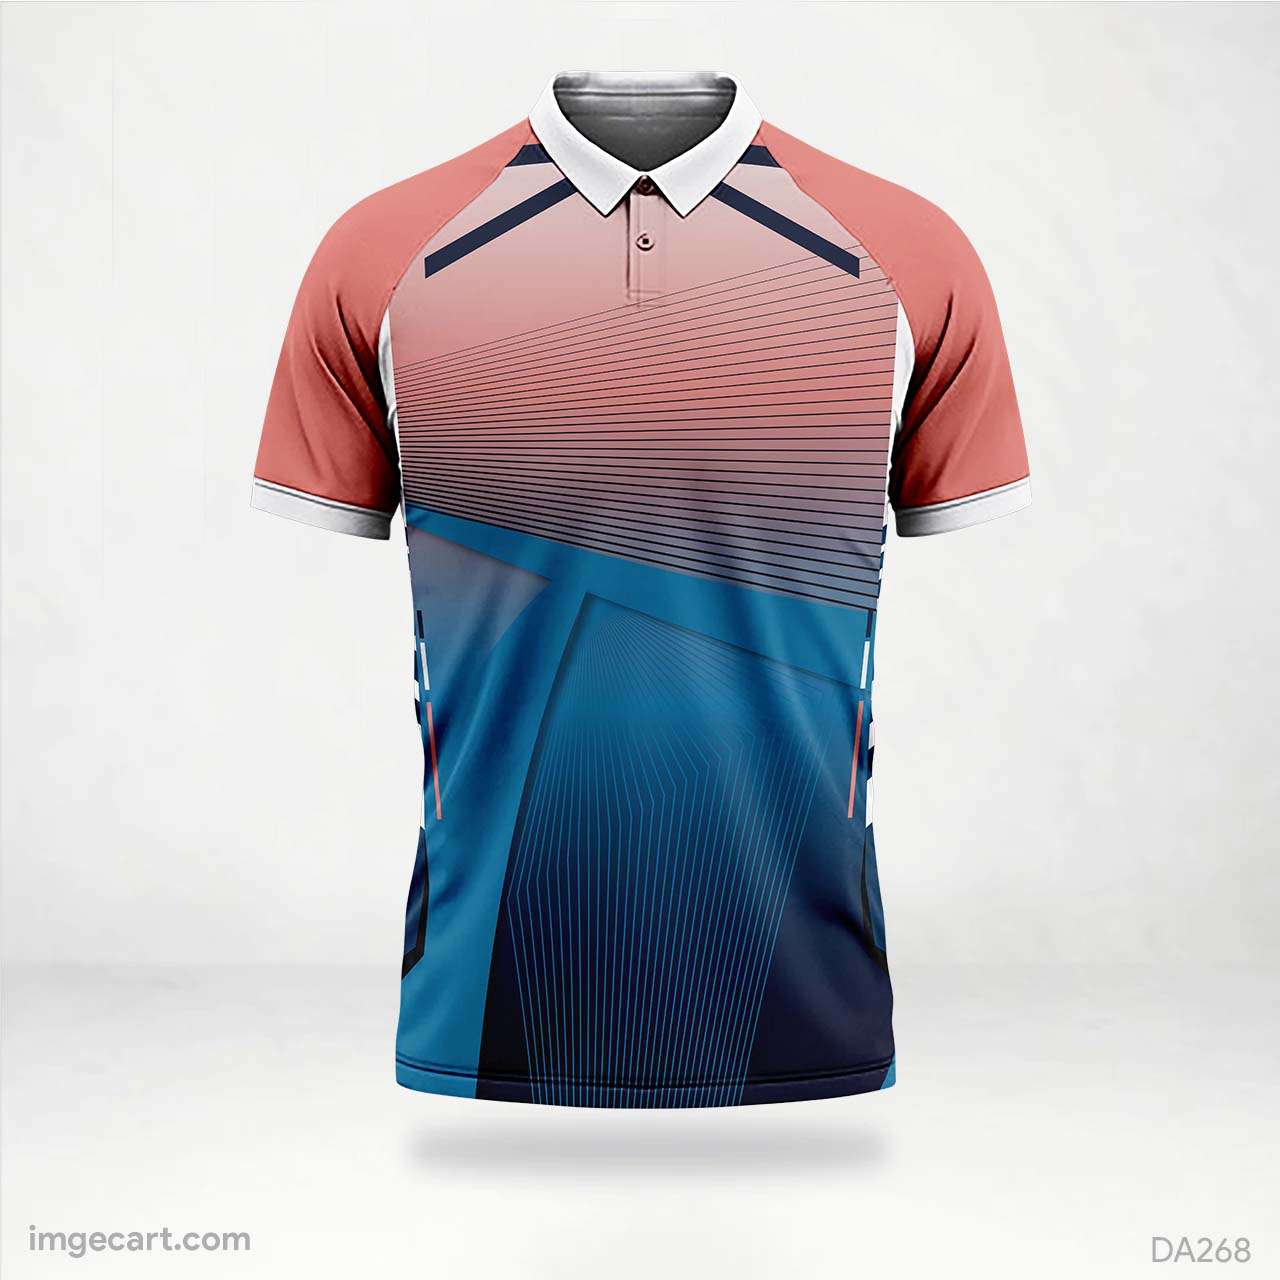 Cricket Jersey Design Pink and Blue gradient - imgecart